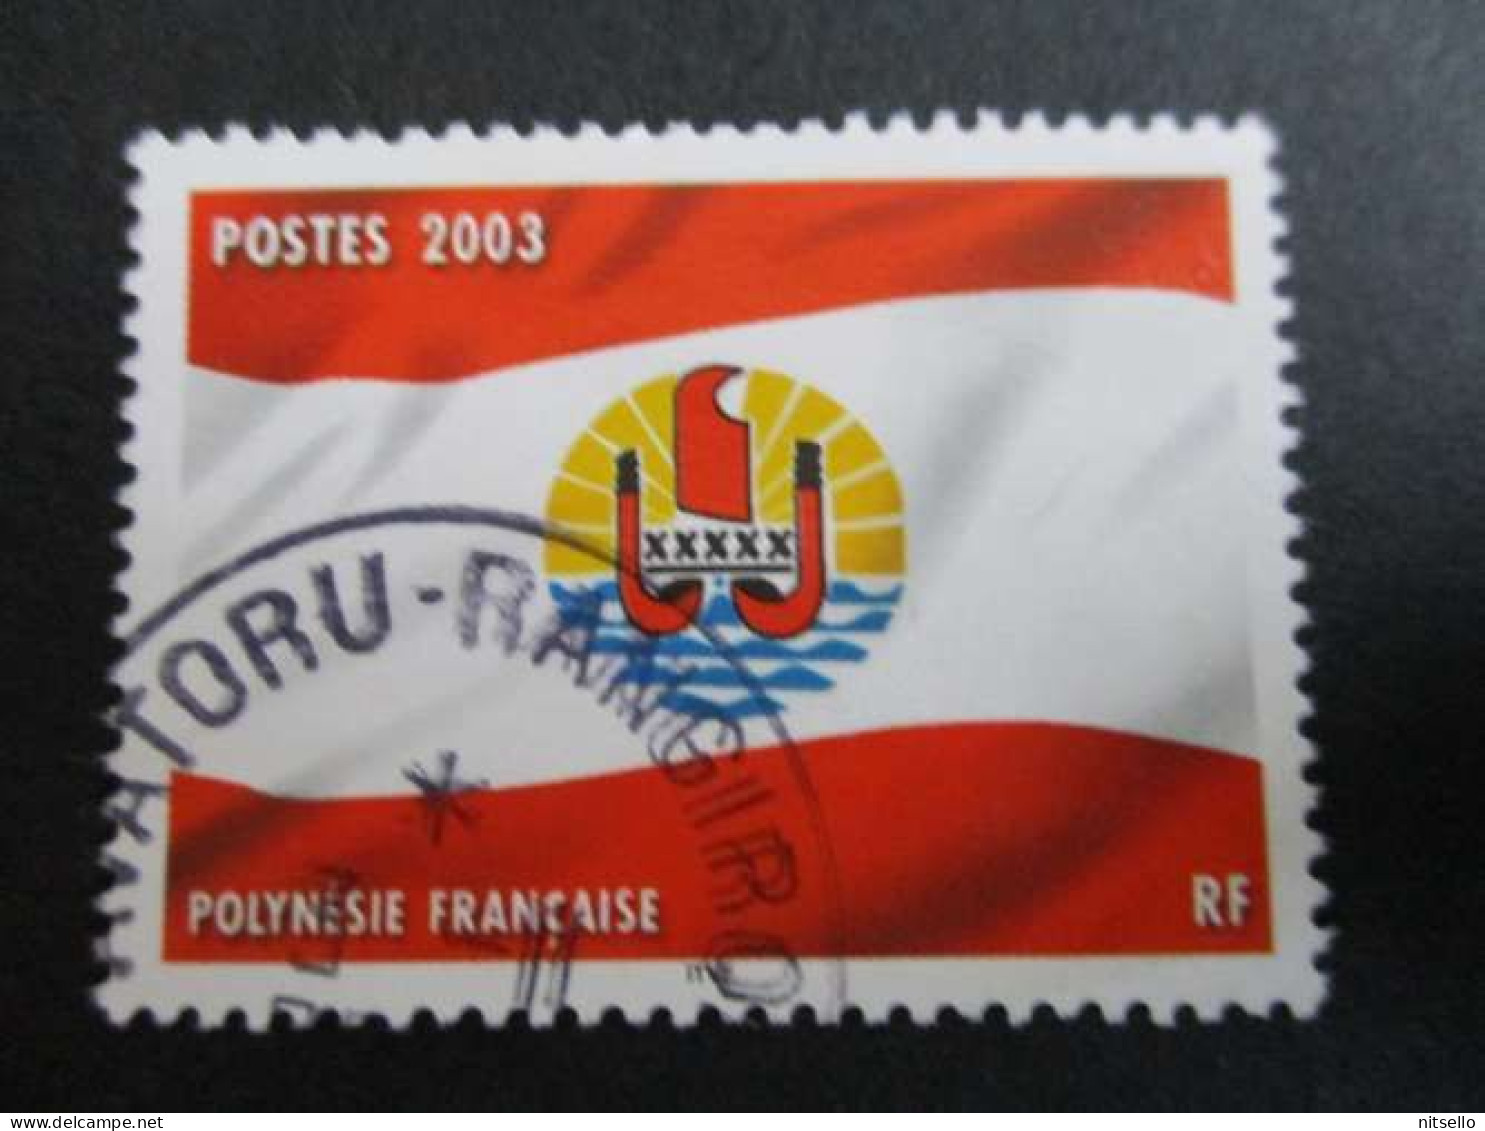 LOTE 2202B ///  (C020)  POLINESIA FRANCESA  - YVERT Nº:697 OBL 2003   ¡¡¡ OFERTA - LIQUIDATION - JE LIQUIDE !!! - Used Stamps